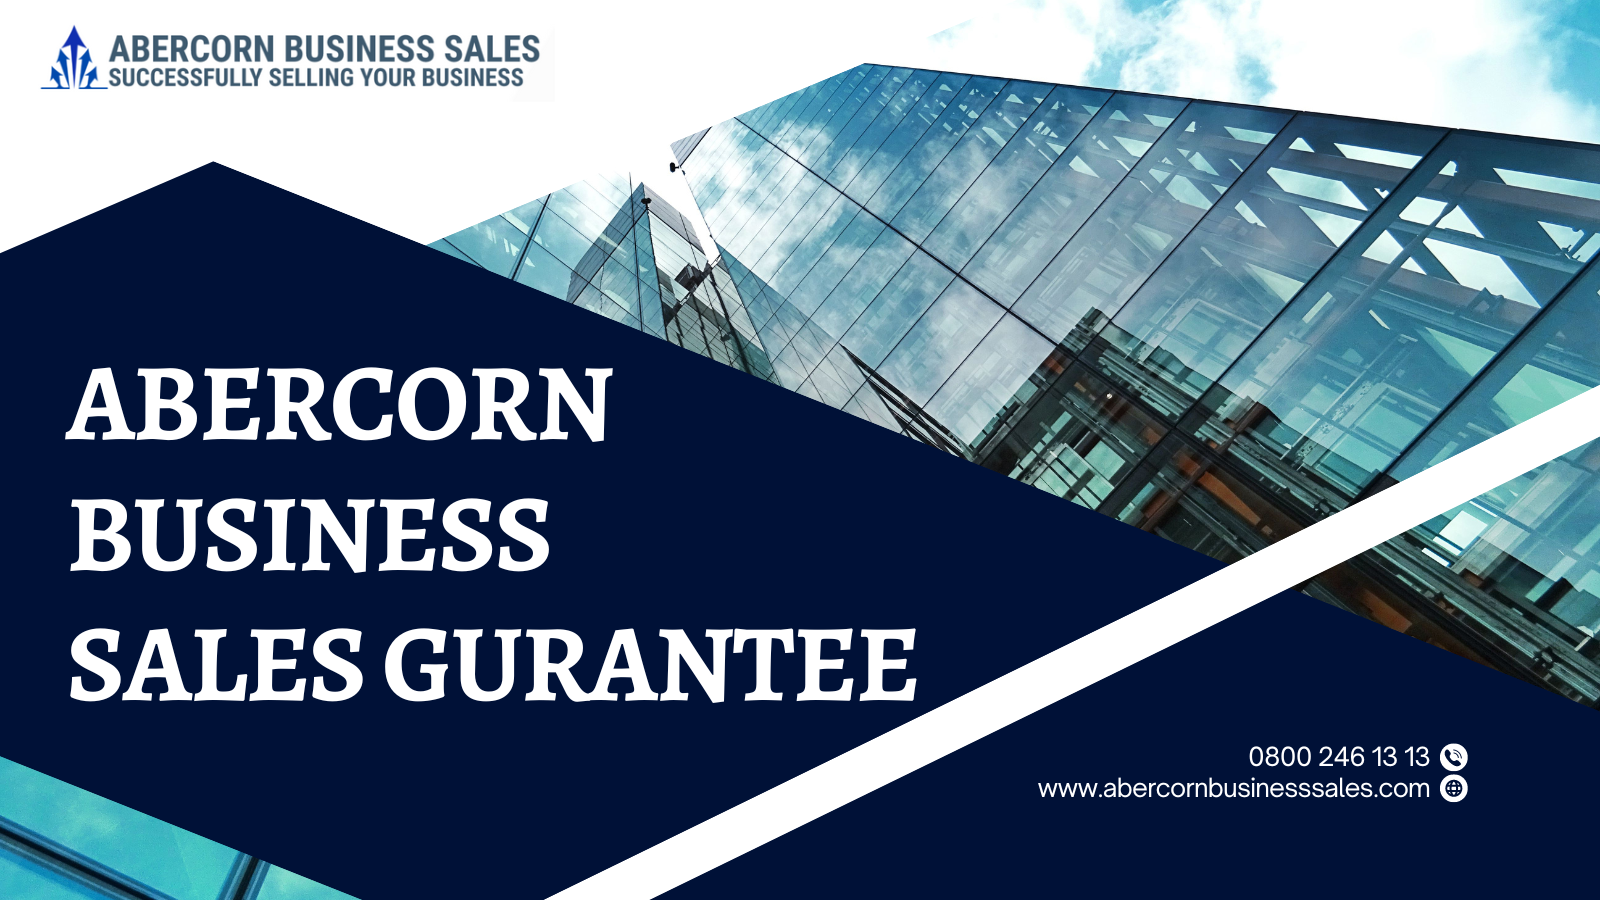 Abercorn Business Sales Guarantee